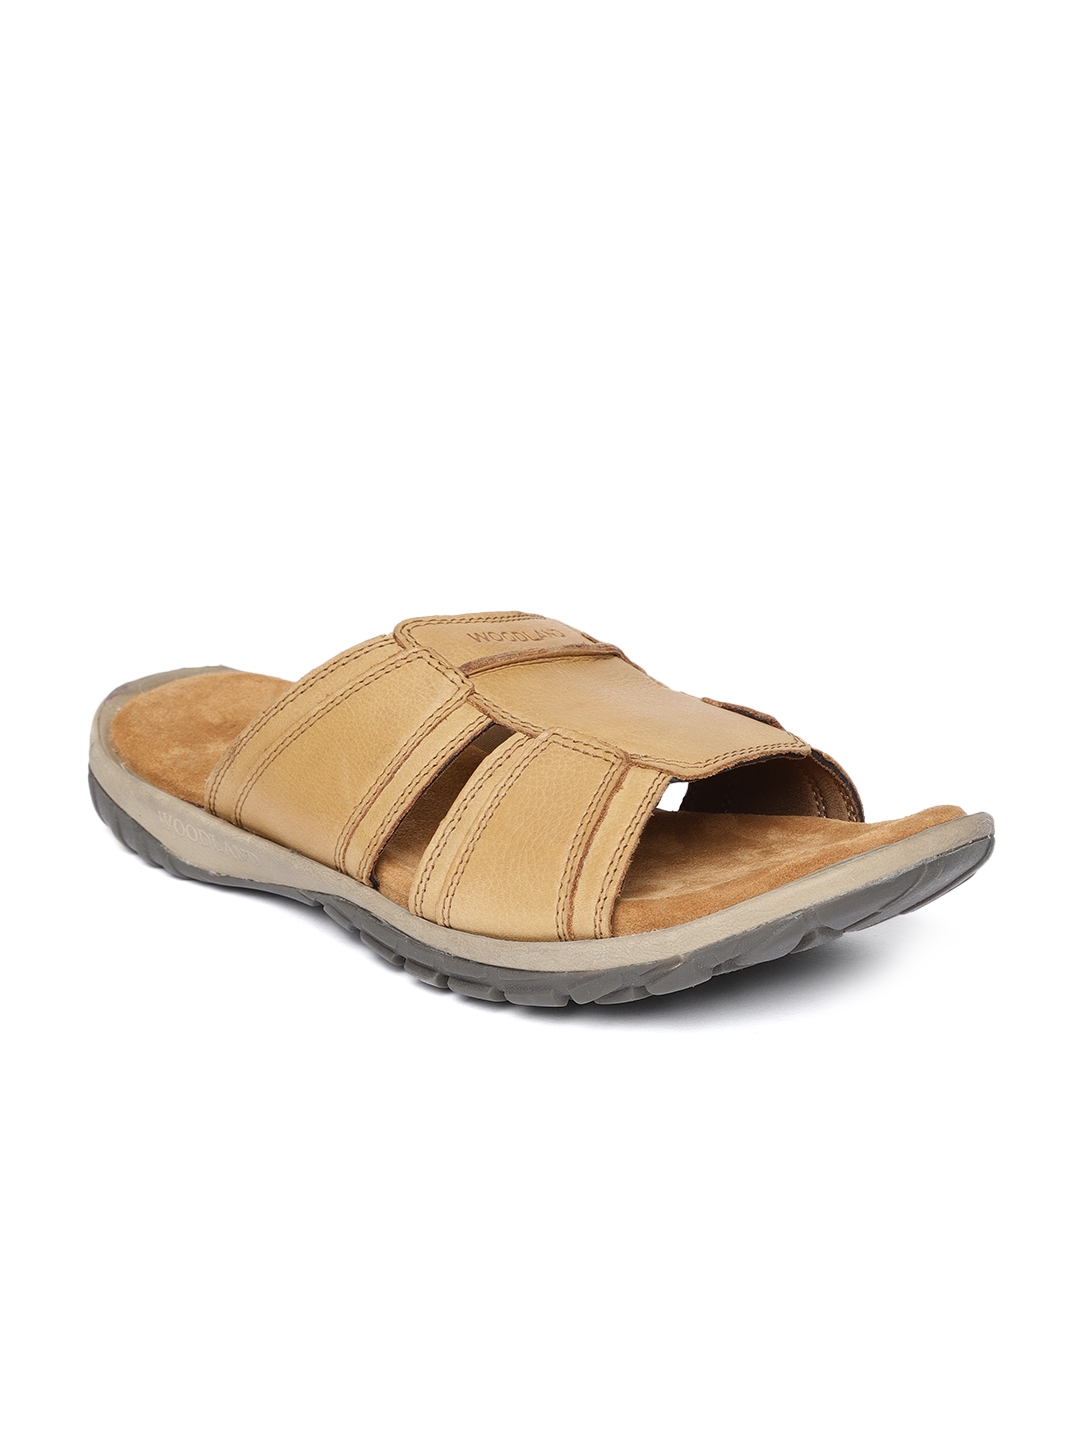 Latest Woodland Criss Cross & Cross Belt Sandals arrivals - Men - 31  products | FASHIOLA.in